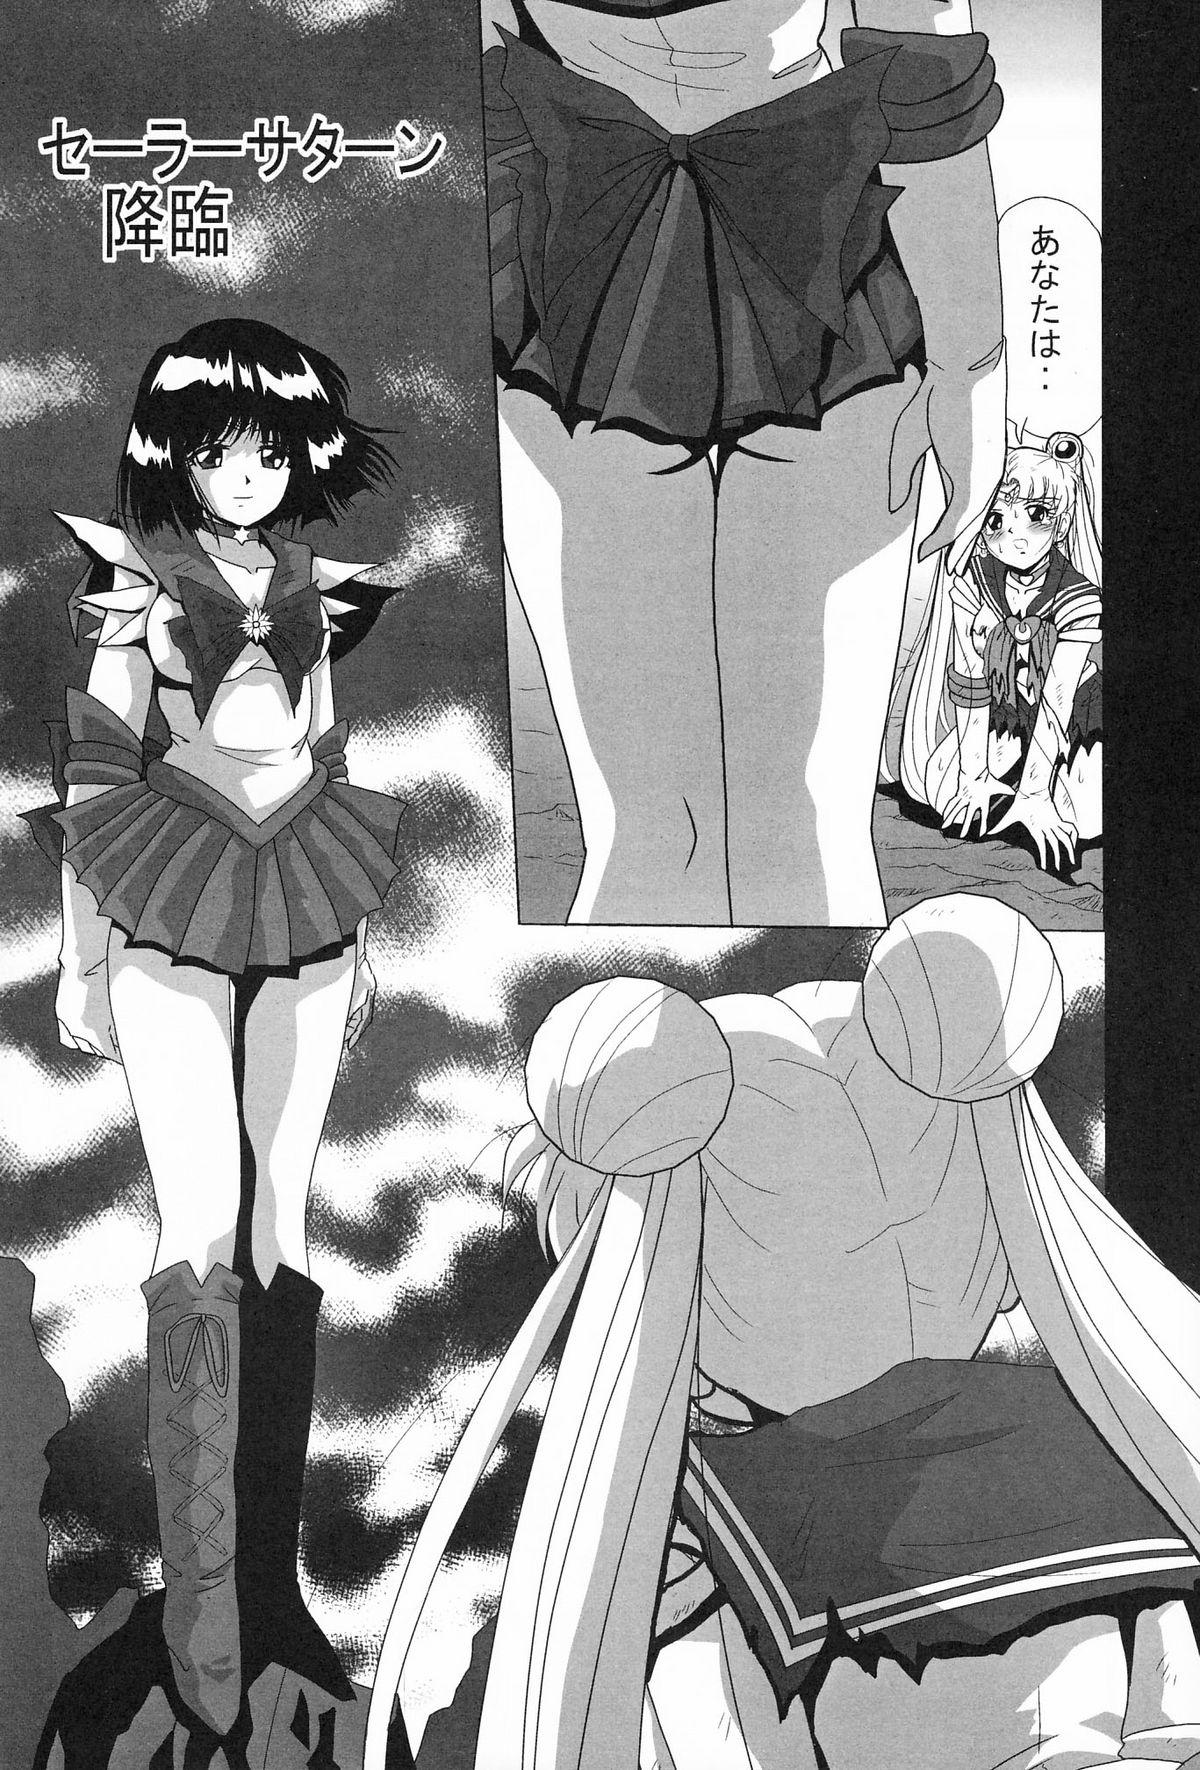 Uniform [Thirty Saver Street 2D Shooting (Maki Hideto, Sawara Kazumitsu)] Silent Saturn S Special - Satān kōrin 10-shūnen kinen hon (Bishoujo Senshi Sailor Moon) - Sailor moon Body - Page 7